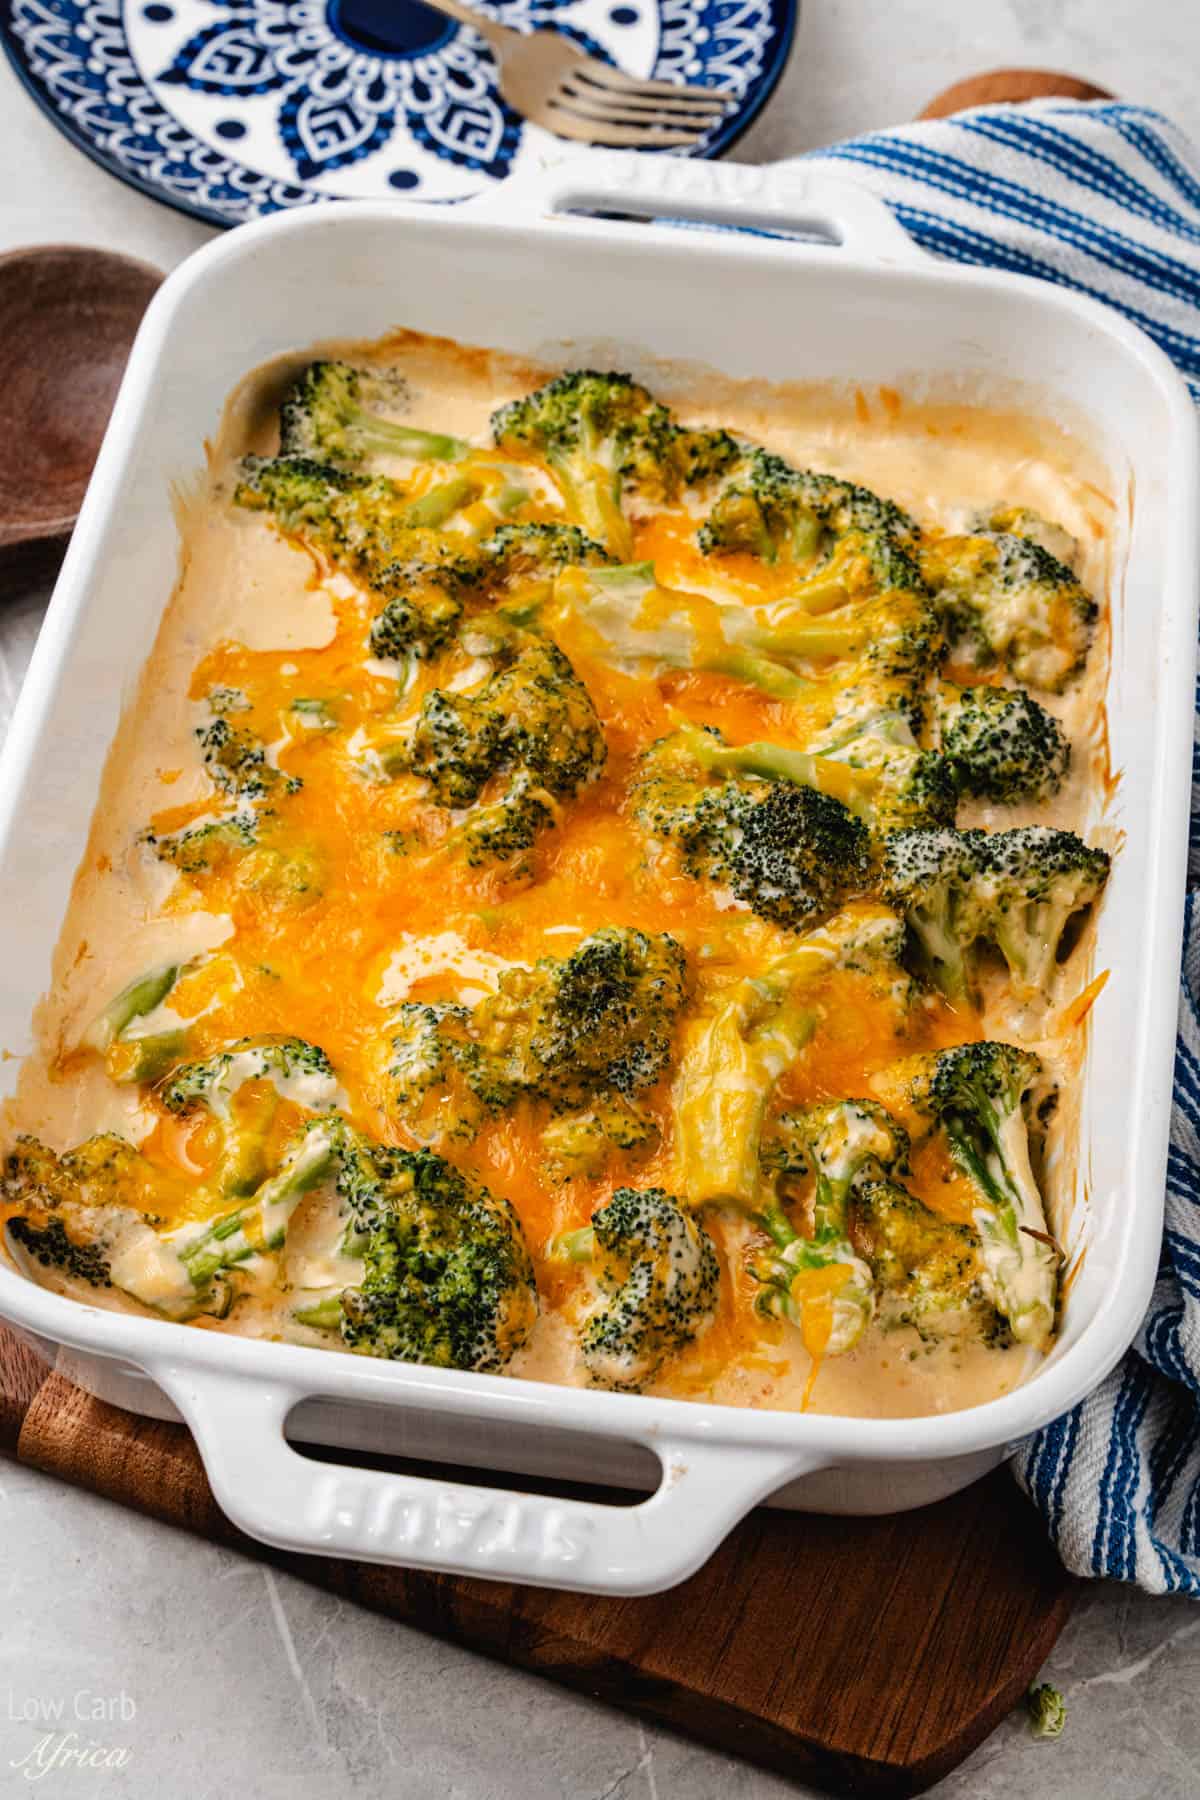 Keto Broccoli casserole ready to eat